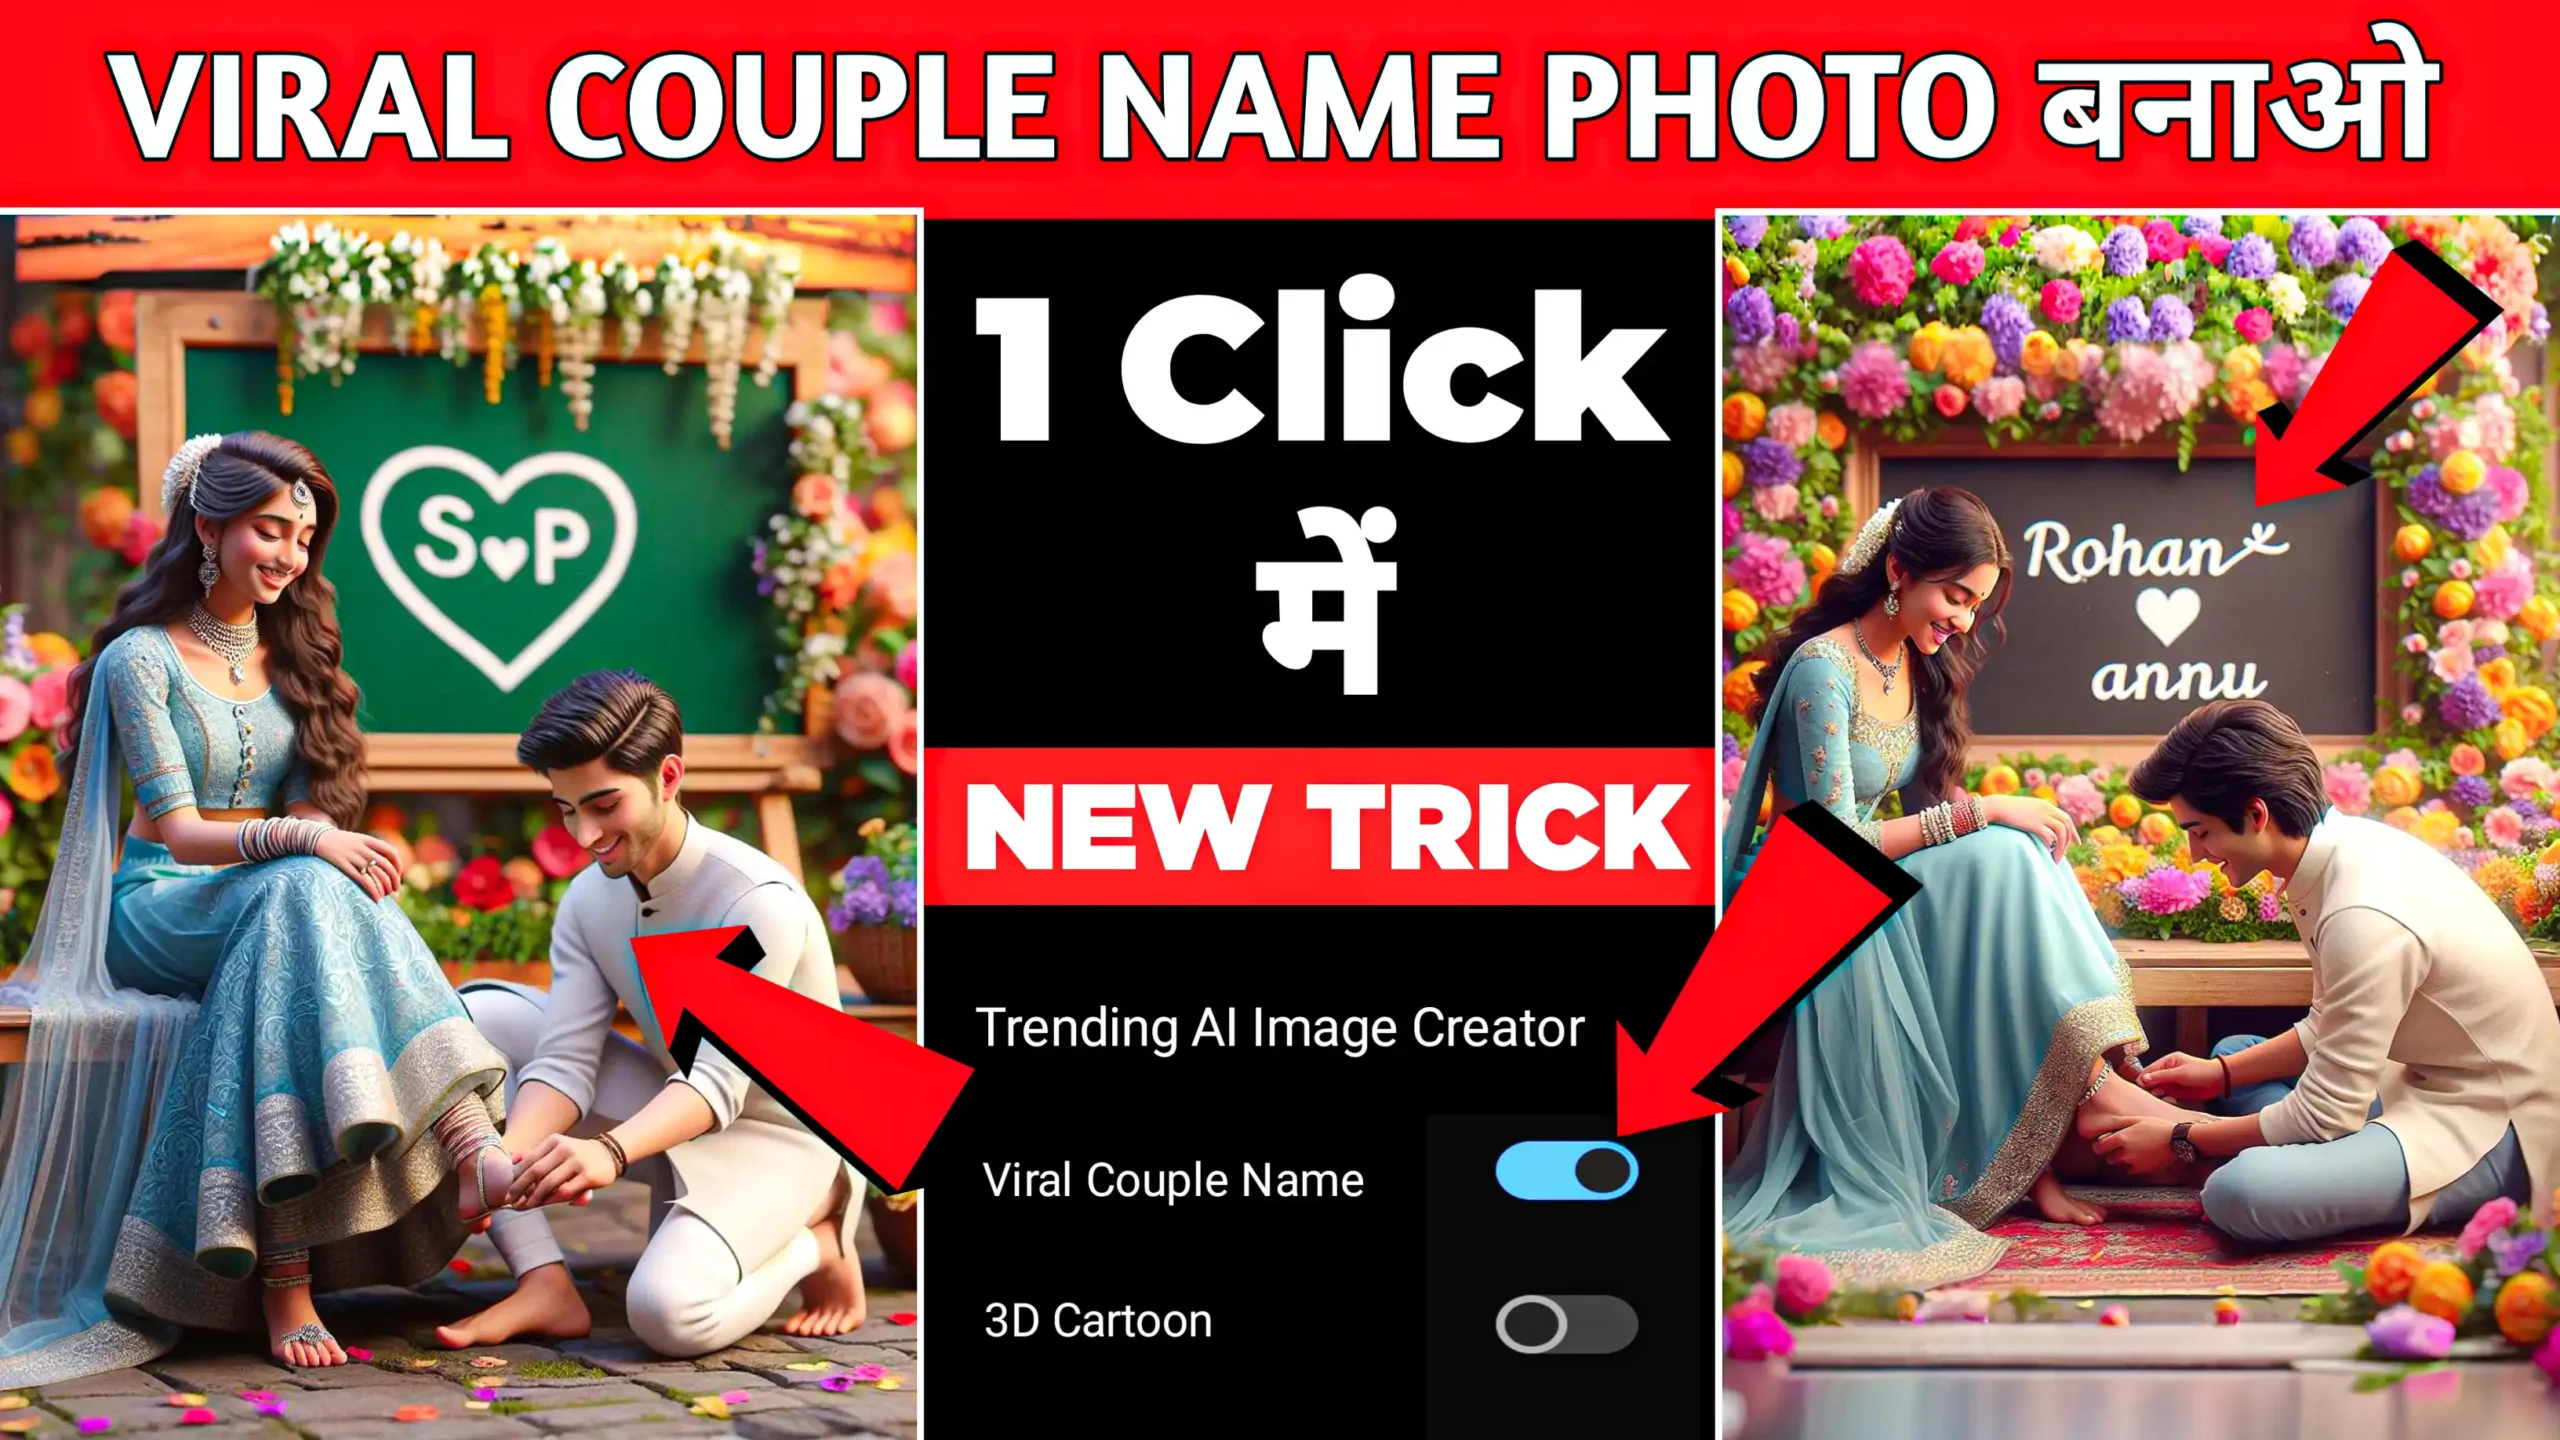 Bing Couple Name Photo generator